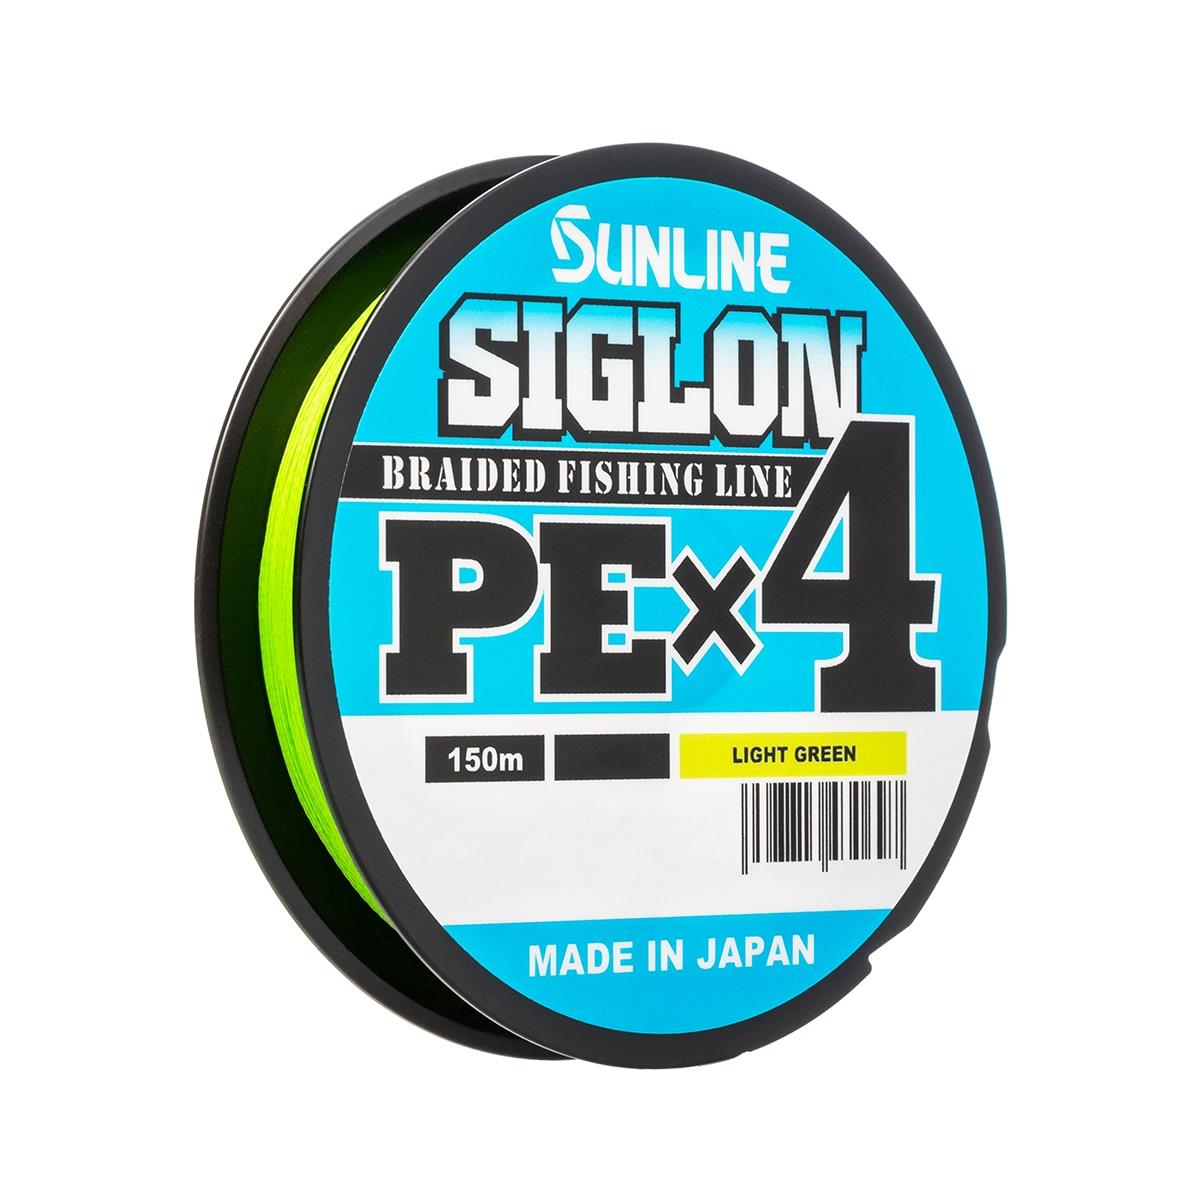 Шнур SIGLON PE×4 150 м (Light green) Sunline шнур siglon pe×4 150 м light green sunline